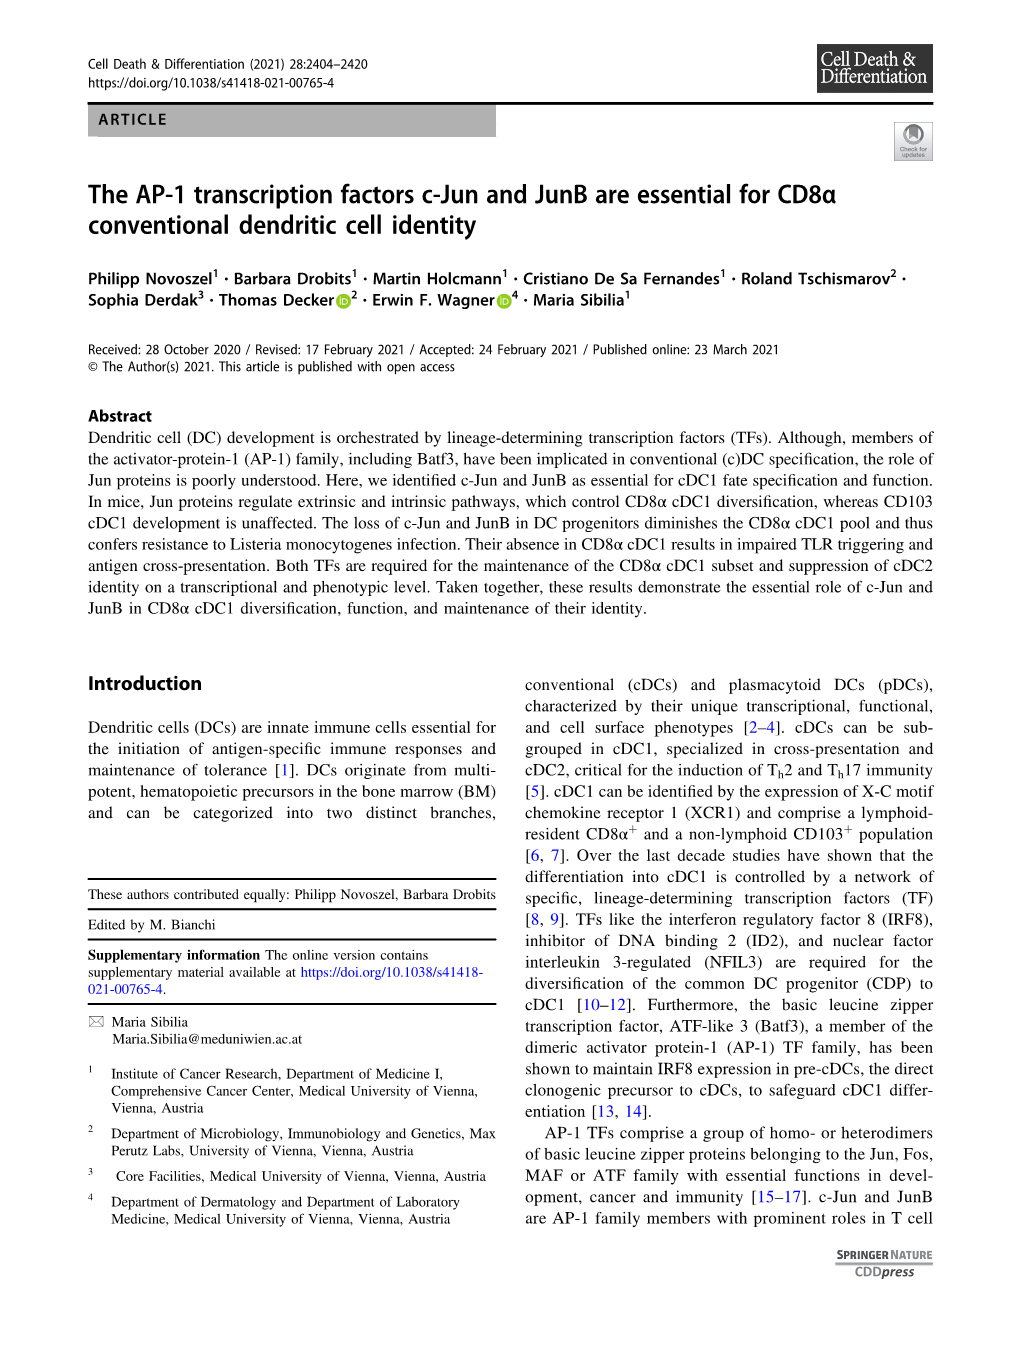 The AP-1 Transcription Factors C-Jun and Junb Are Essential for CD8Î